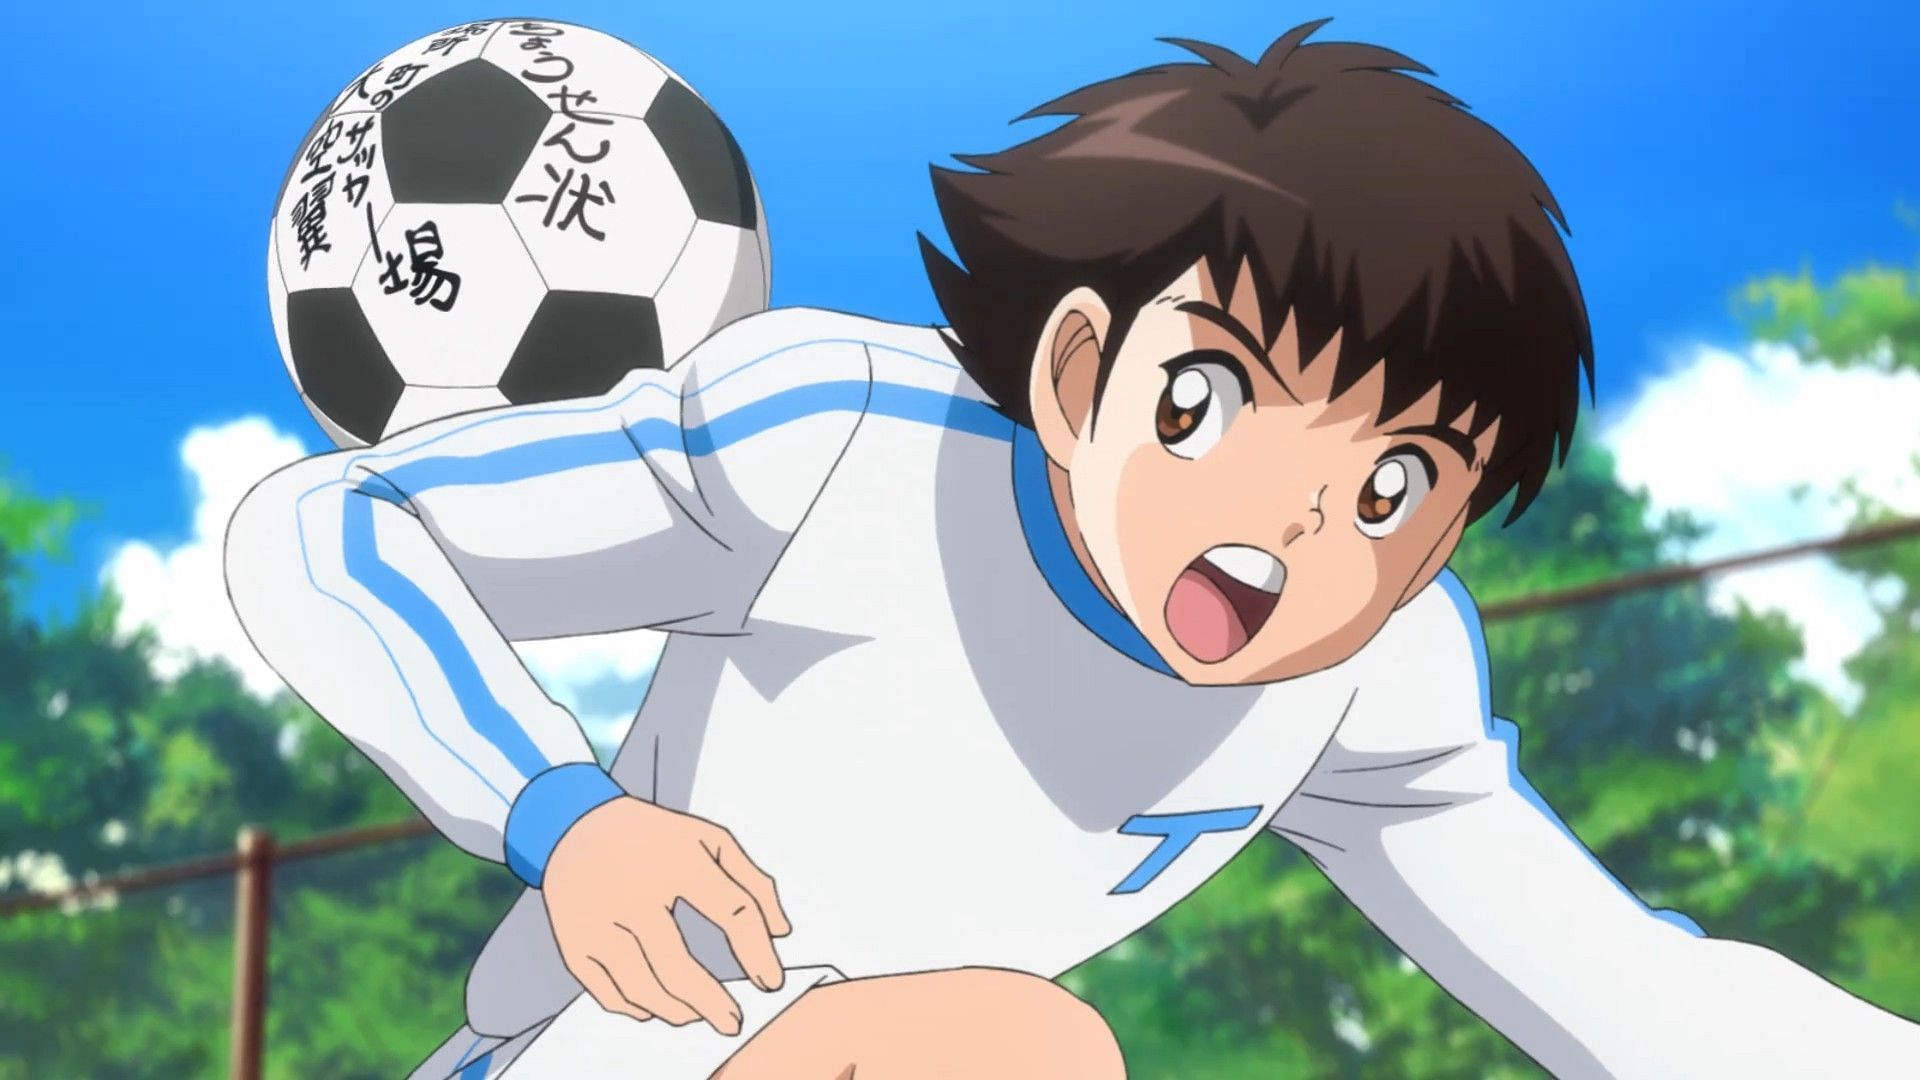 Ao Ashi, A True Soccer Anime 